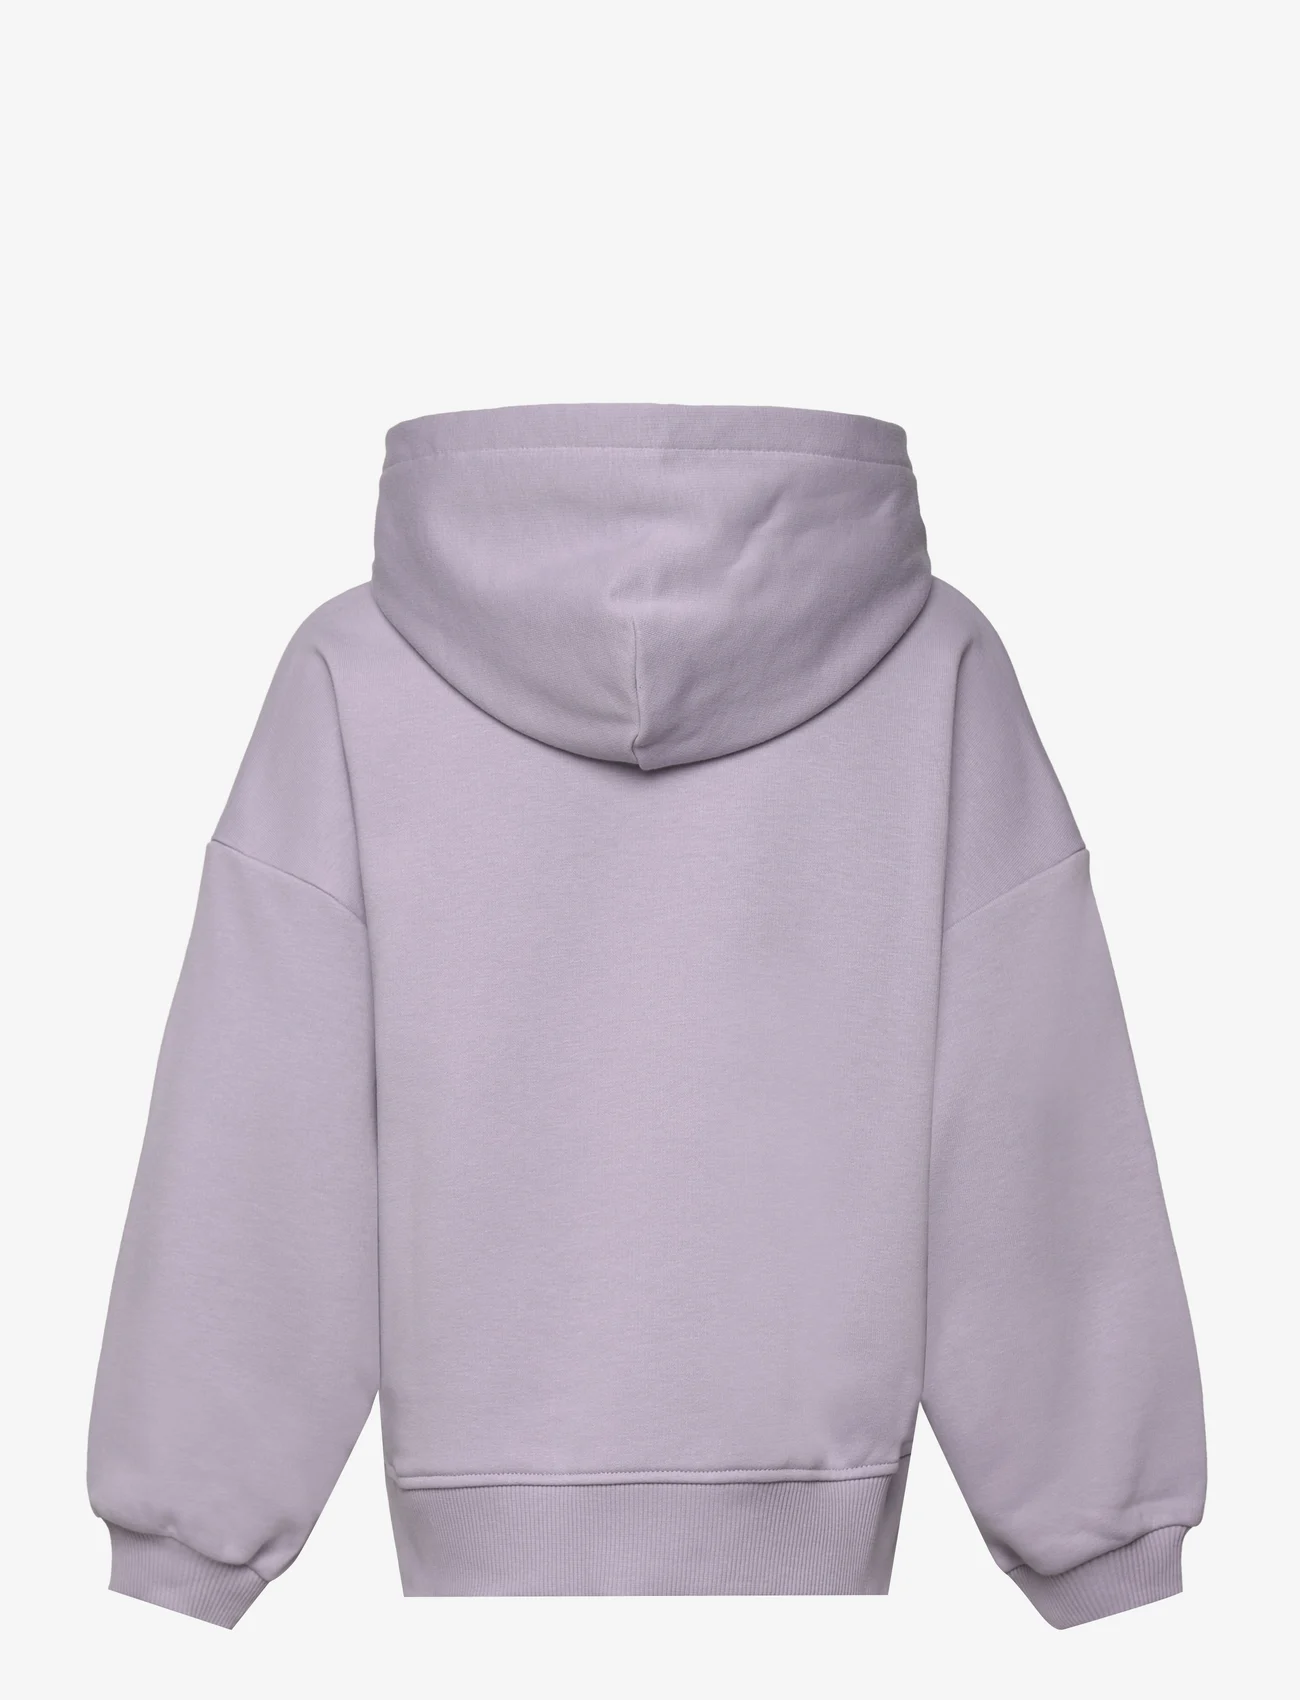 Calvin Klein - MONOGRAM OFF PLACED HOODIE - kapuzenpullover - lavender aura - 1